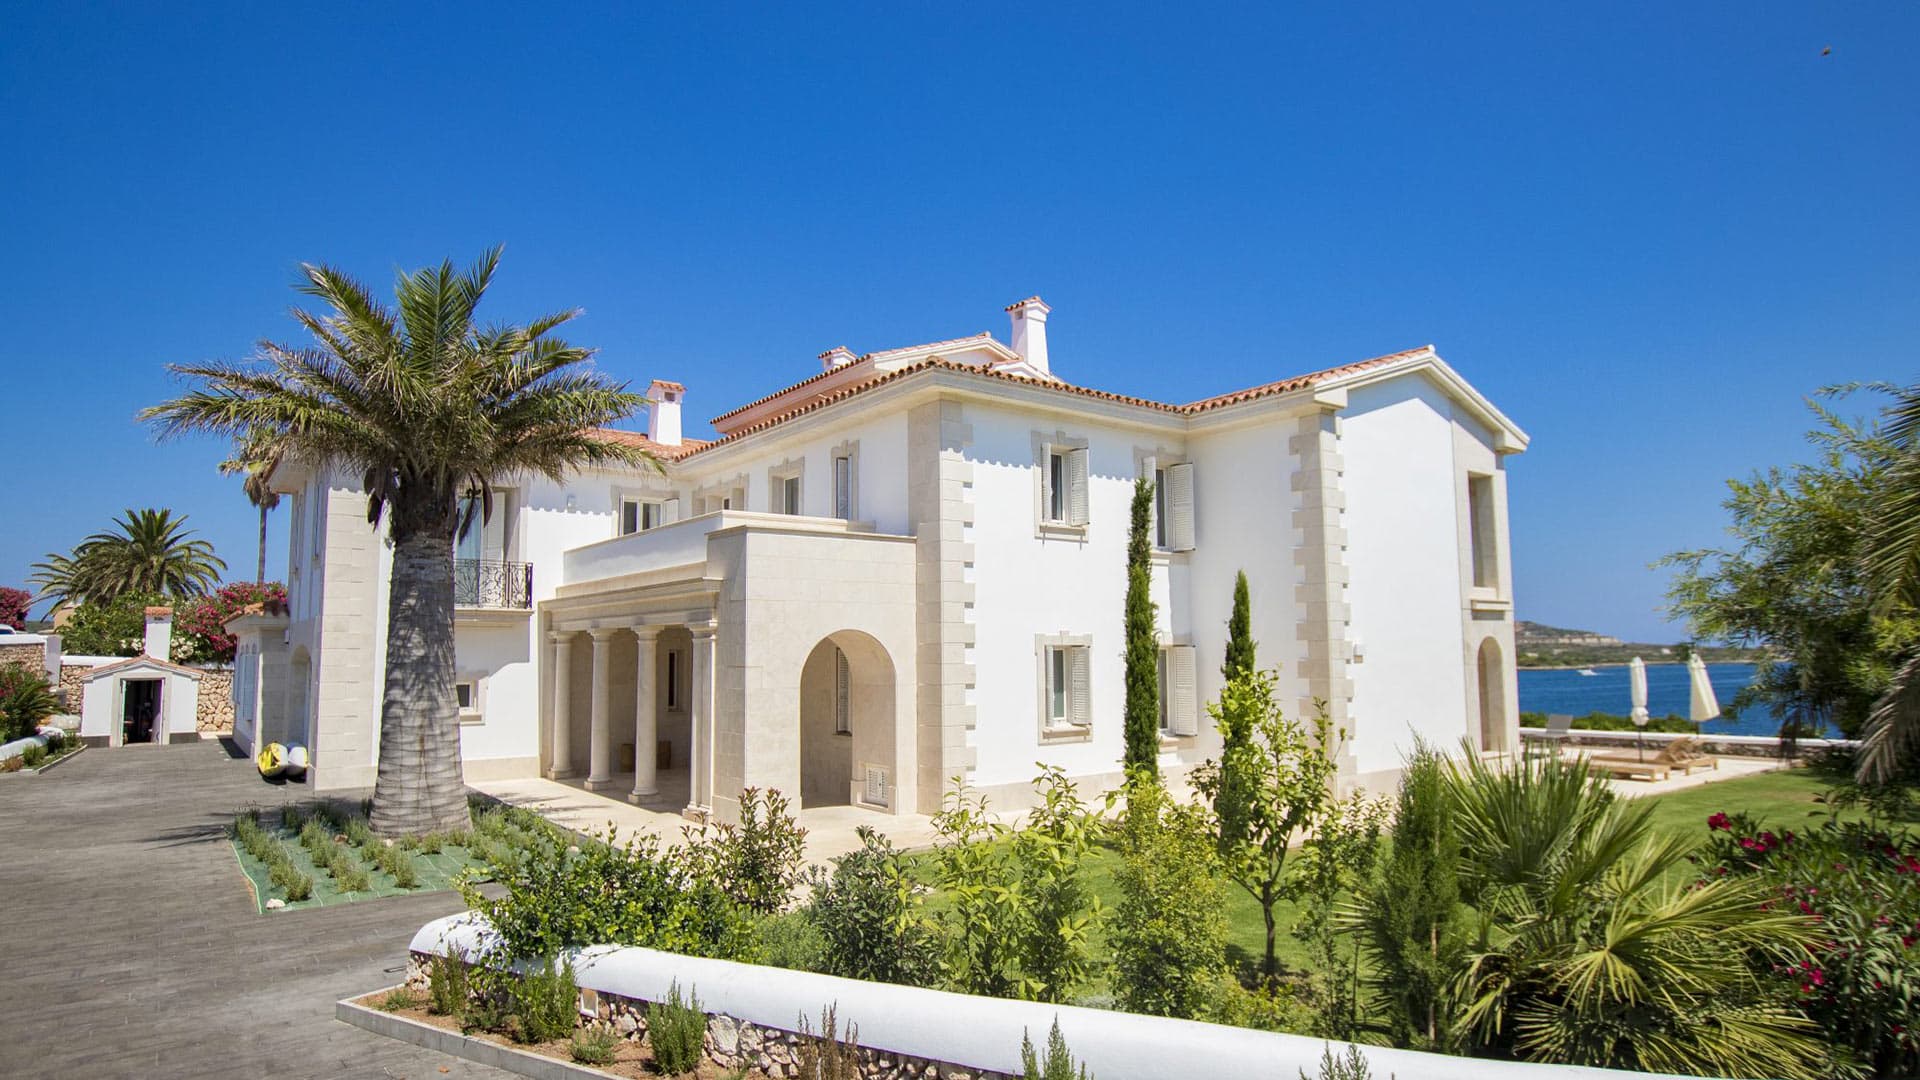 Villa Villa Manicienta, Rental in Menorca